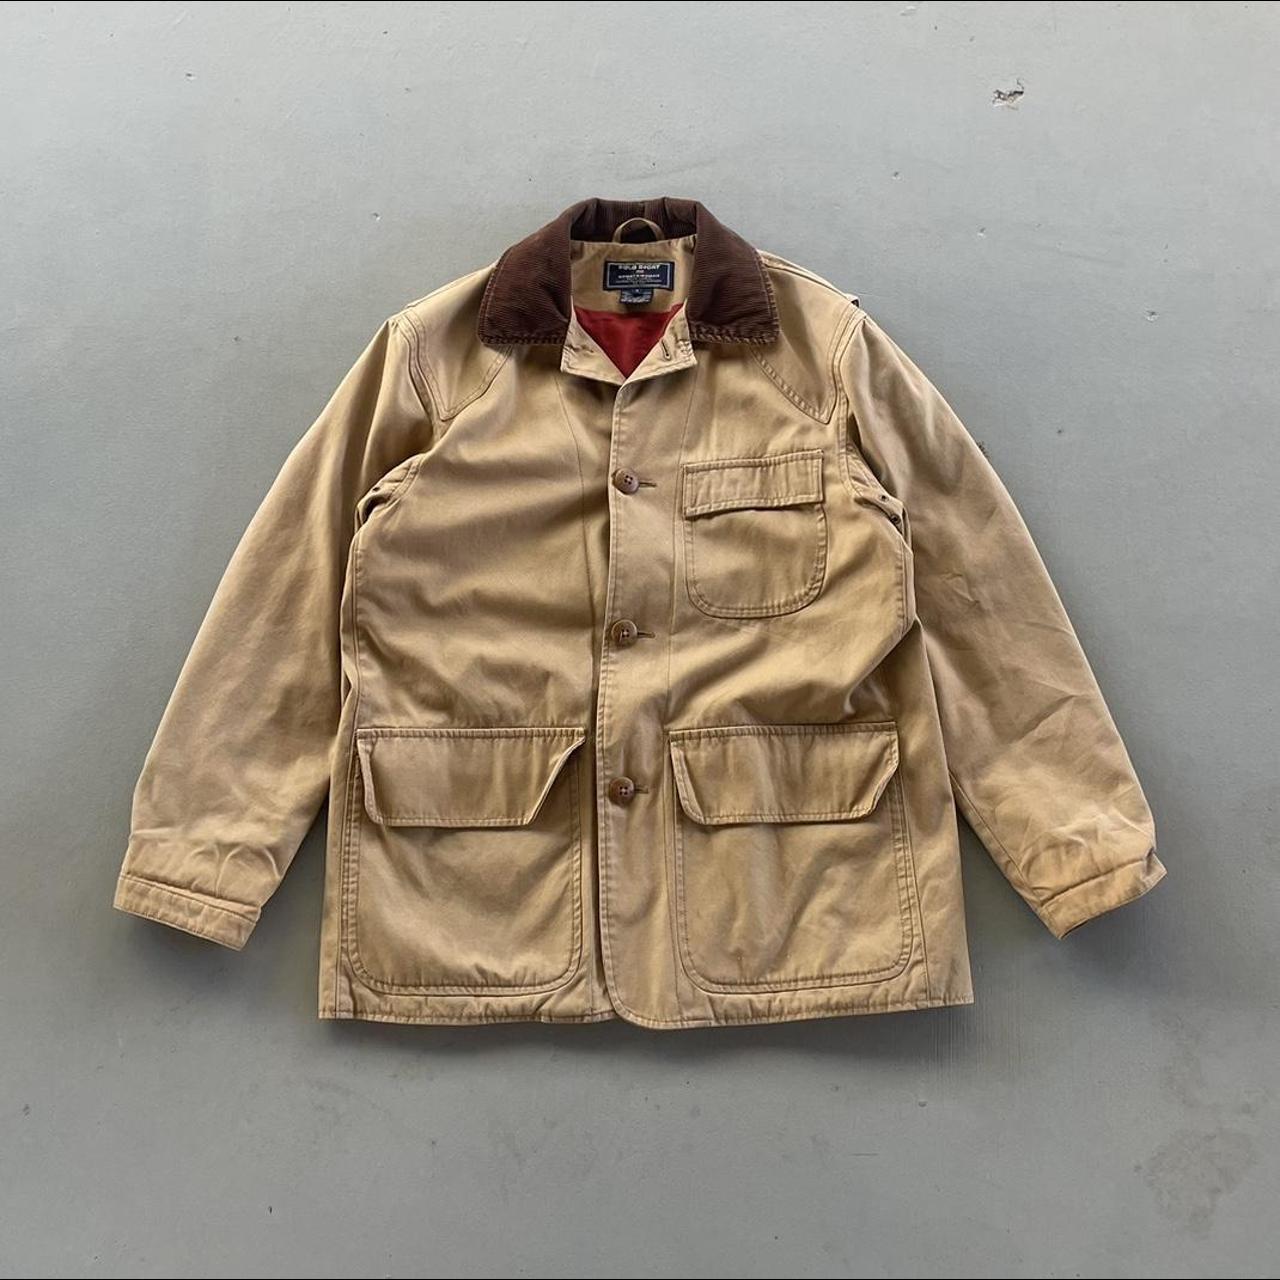 Vintage Polo Sport Jacket 🔥🔥🔥 (I think this jacket... - Depop